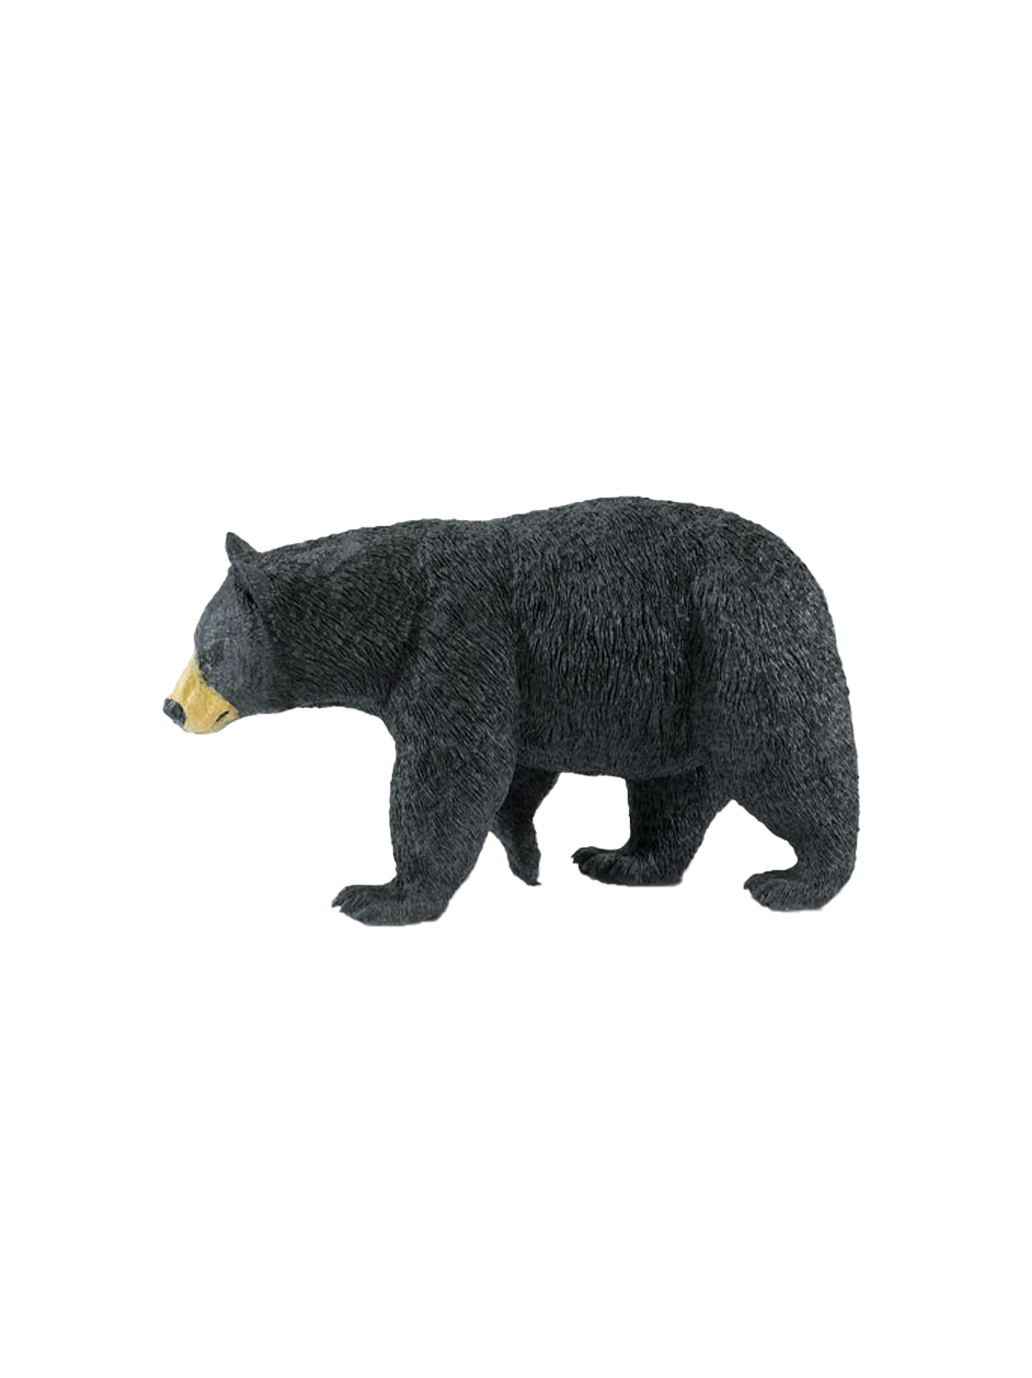 Una gran figura de un oso negro.